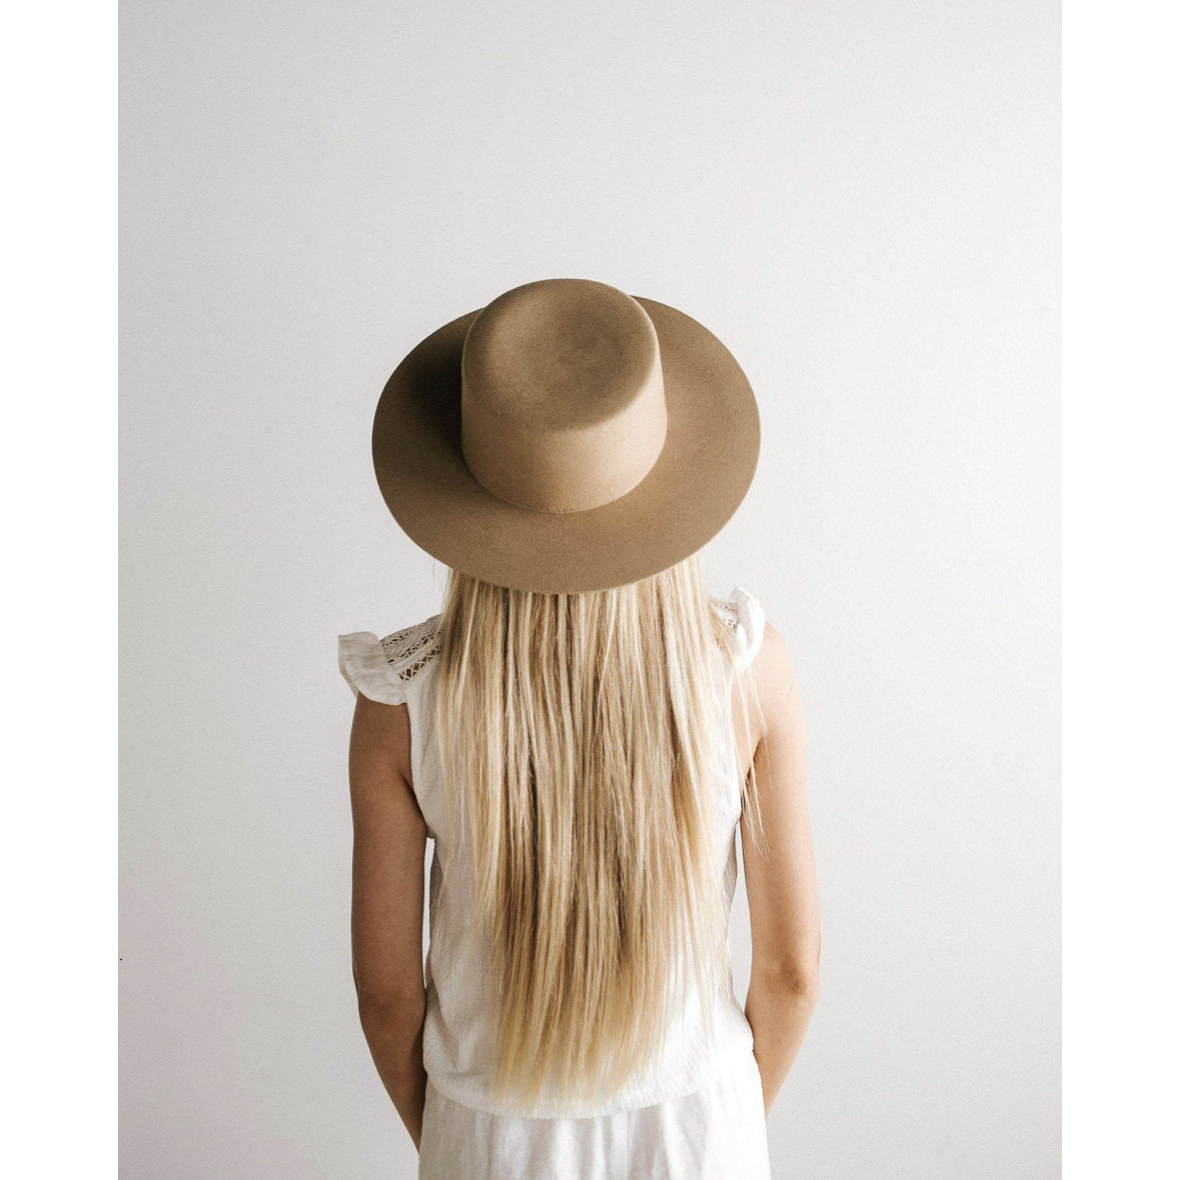 Gigi Pip Dahlia Tan - Women's Boater Hat